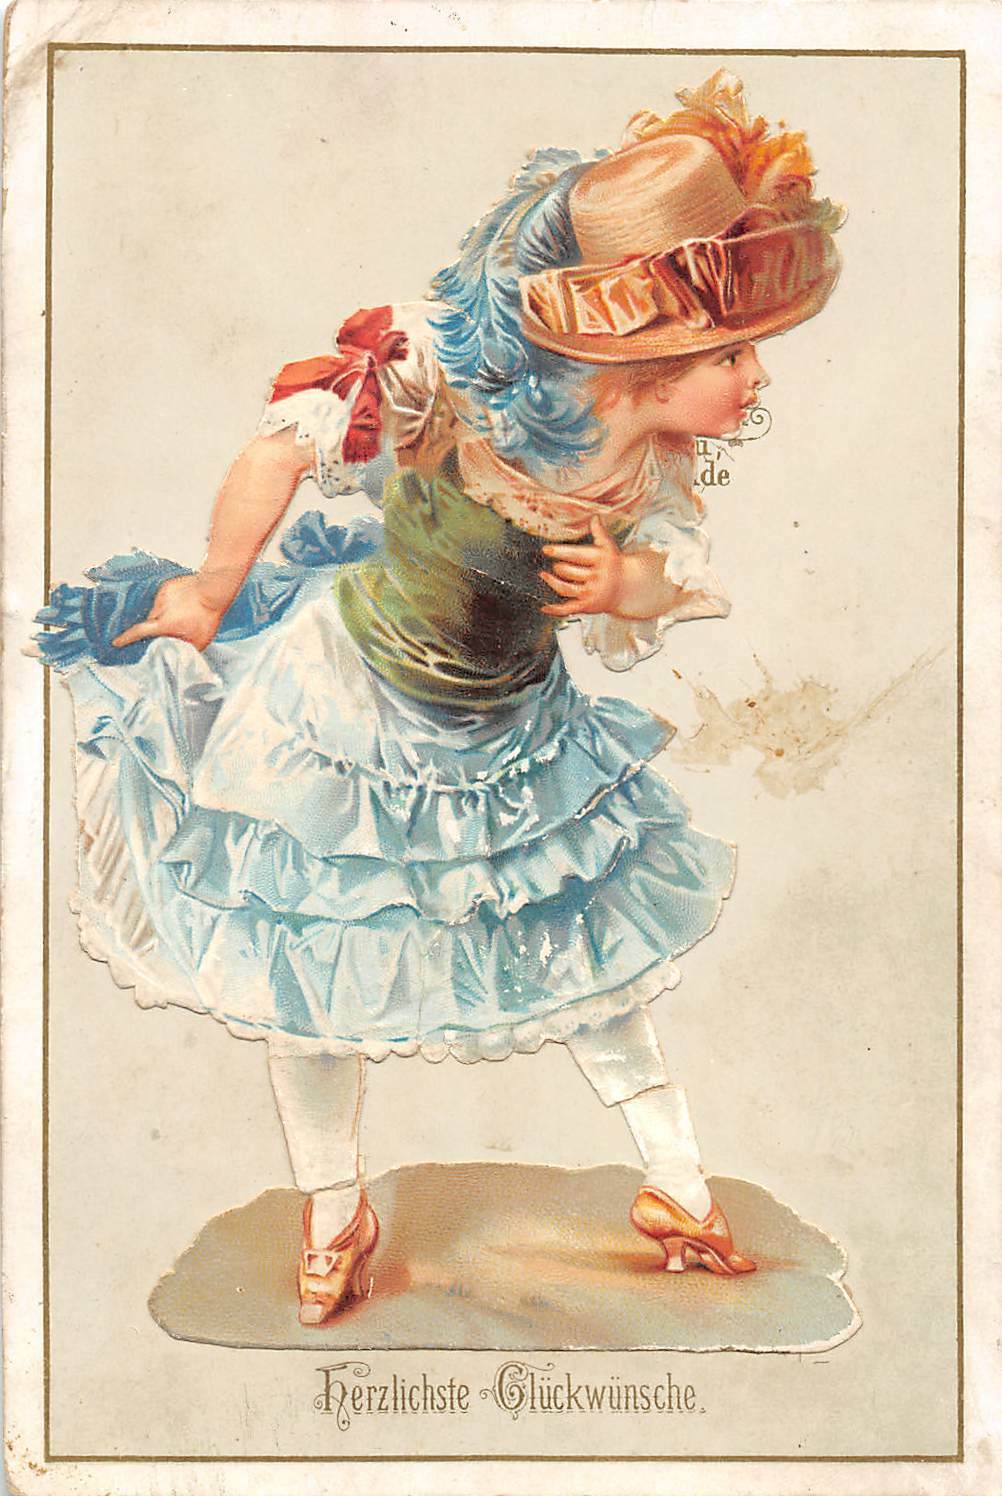 1886 GERMAN~HERZLICHSTE GLUCKWUNSCHE~WARMEST CONGRATULATIONS~GREETING CARD